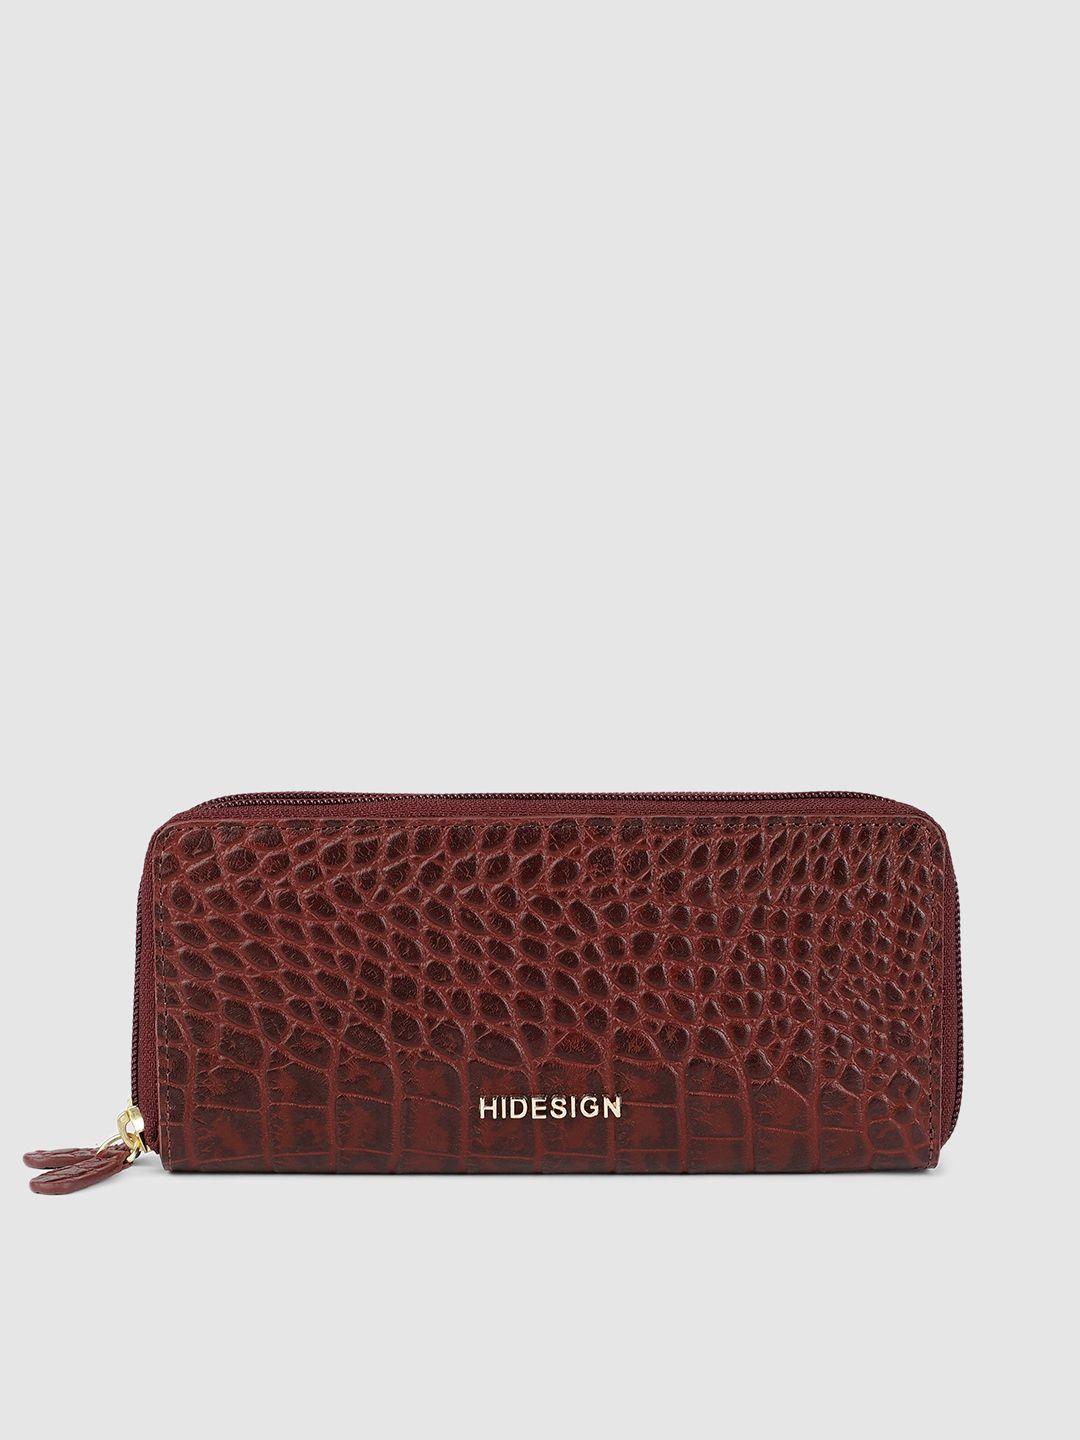 hidesign women maroon croc textured leather zip around wallet